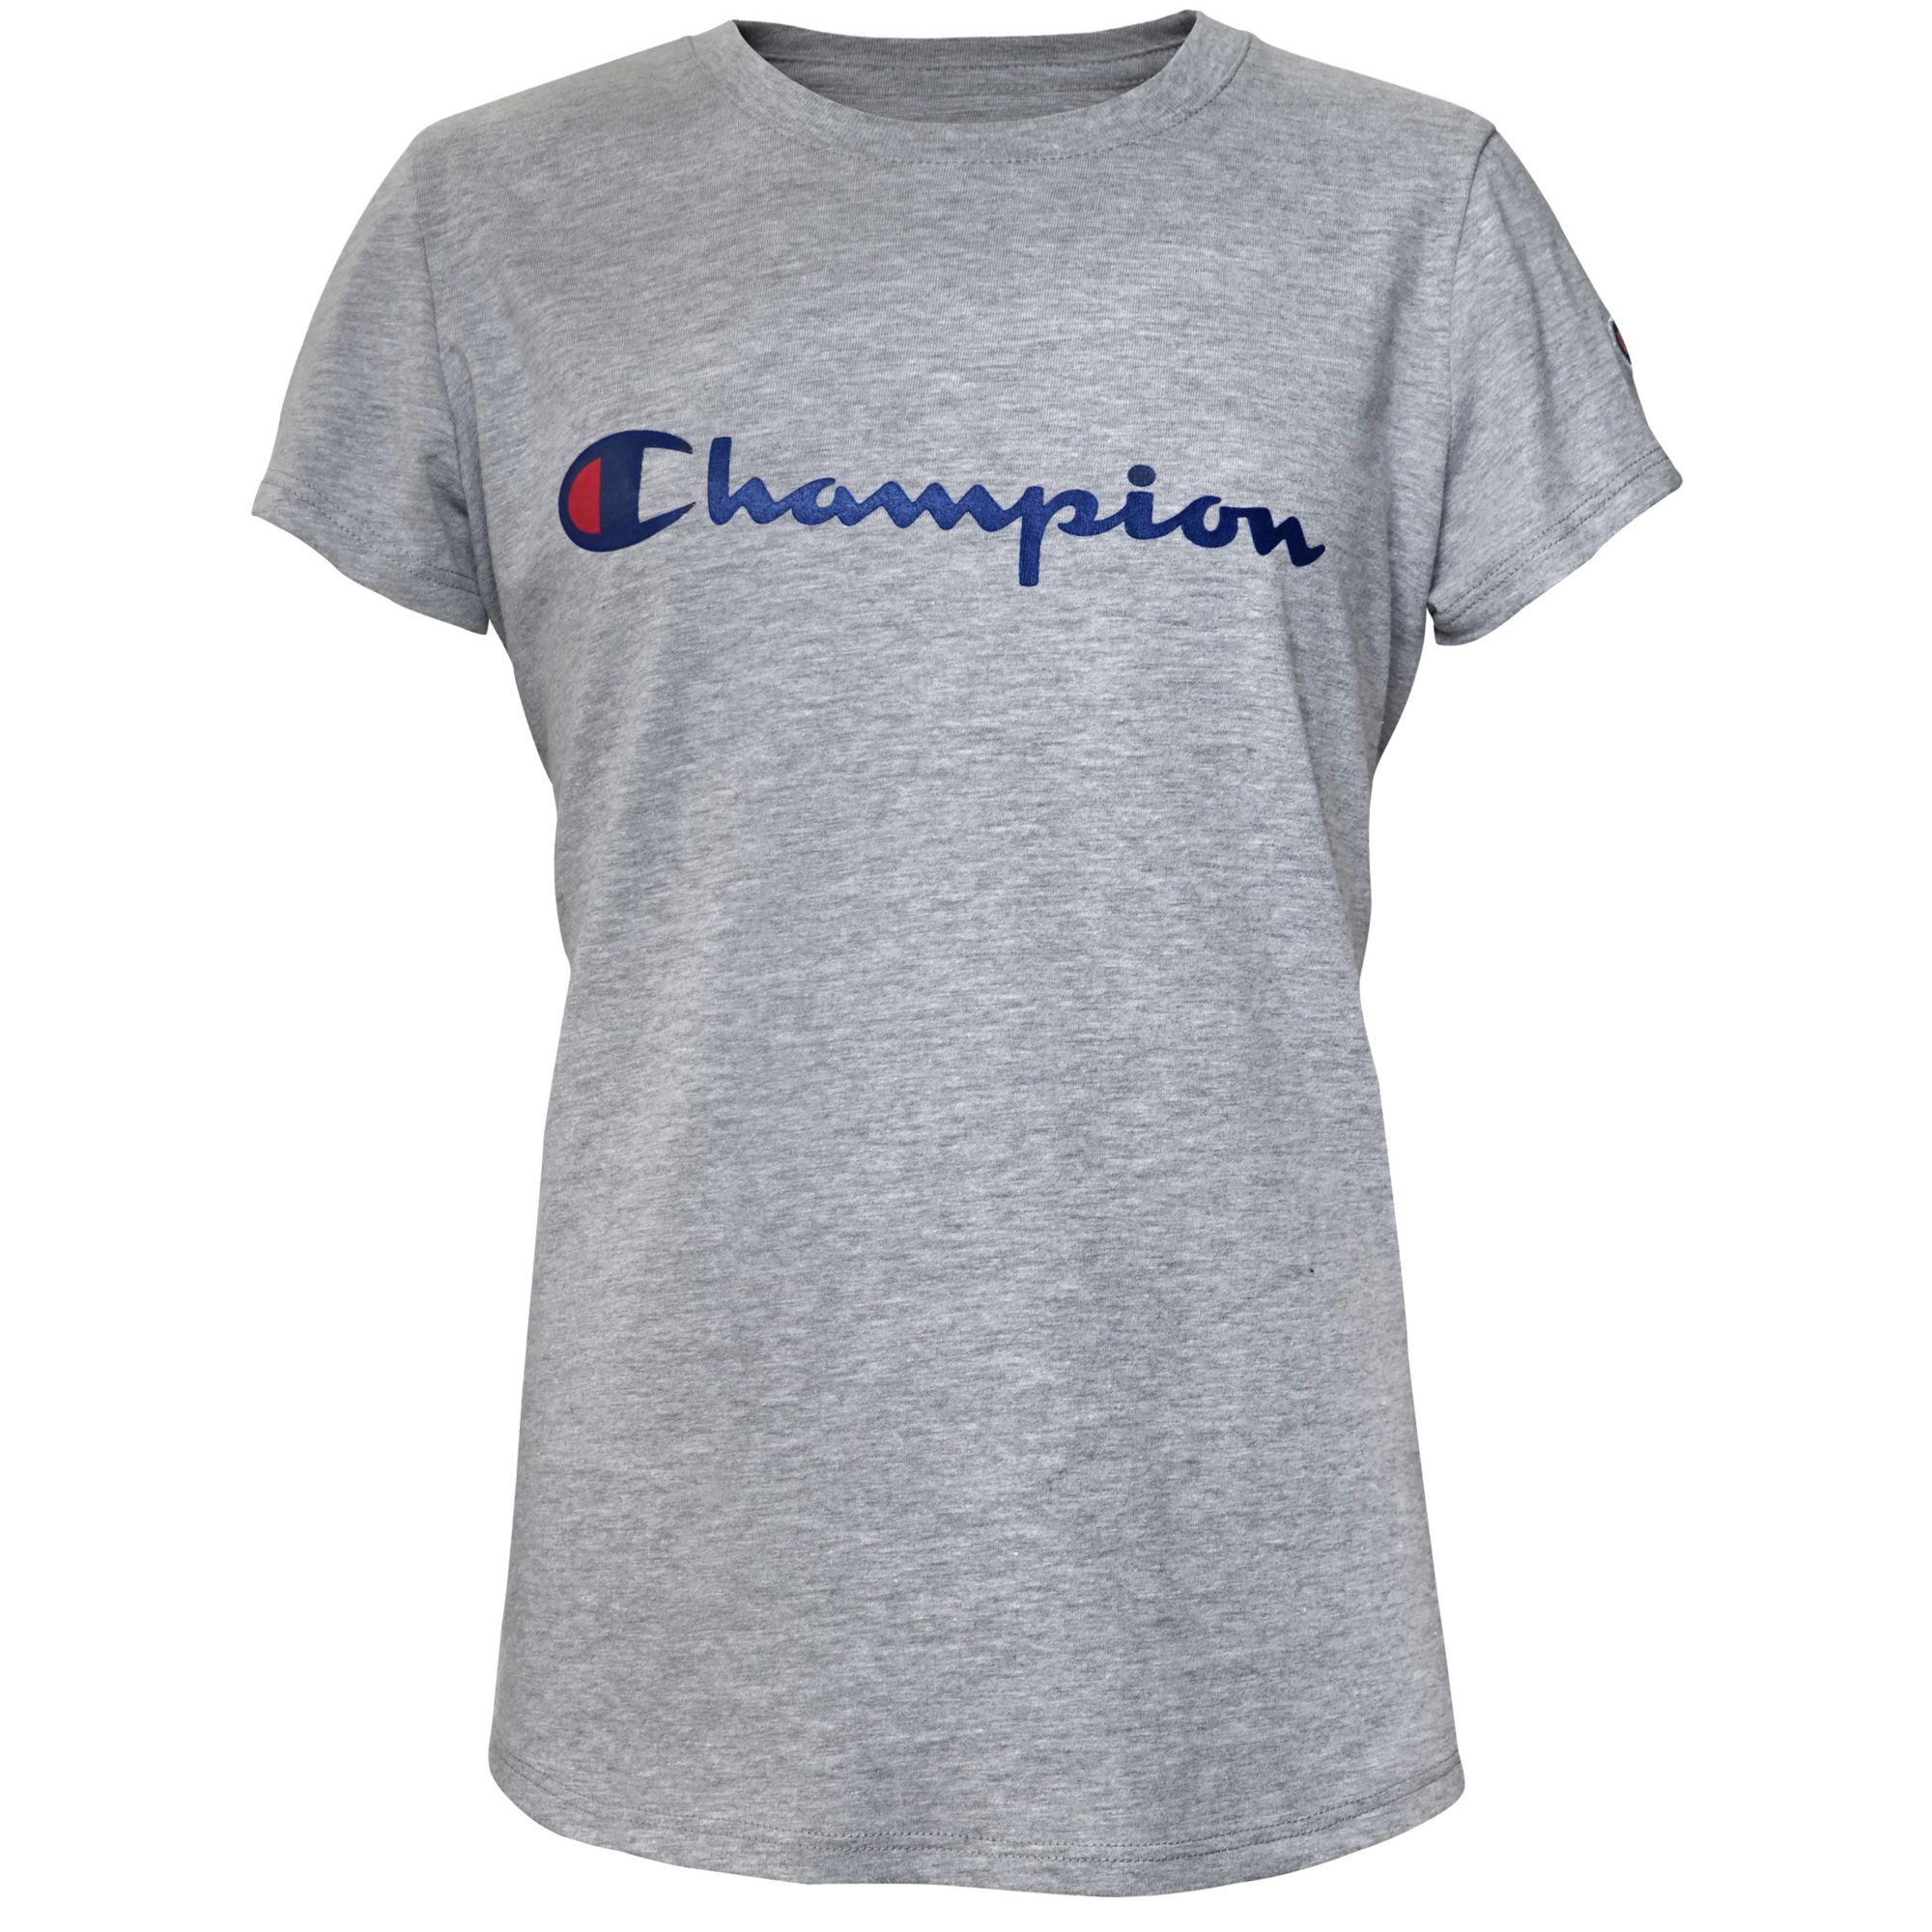 champion tee shirts